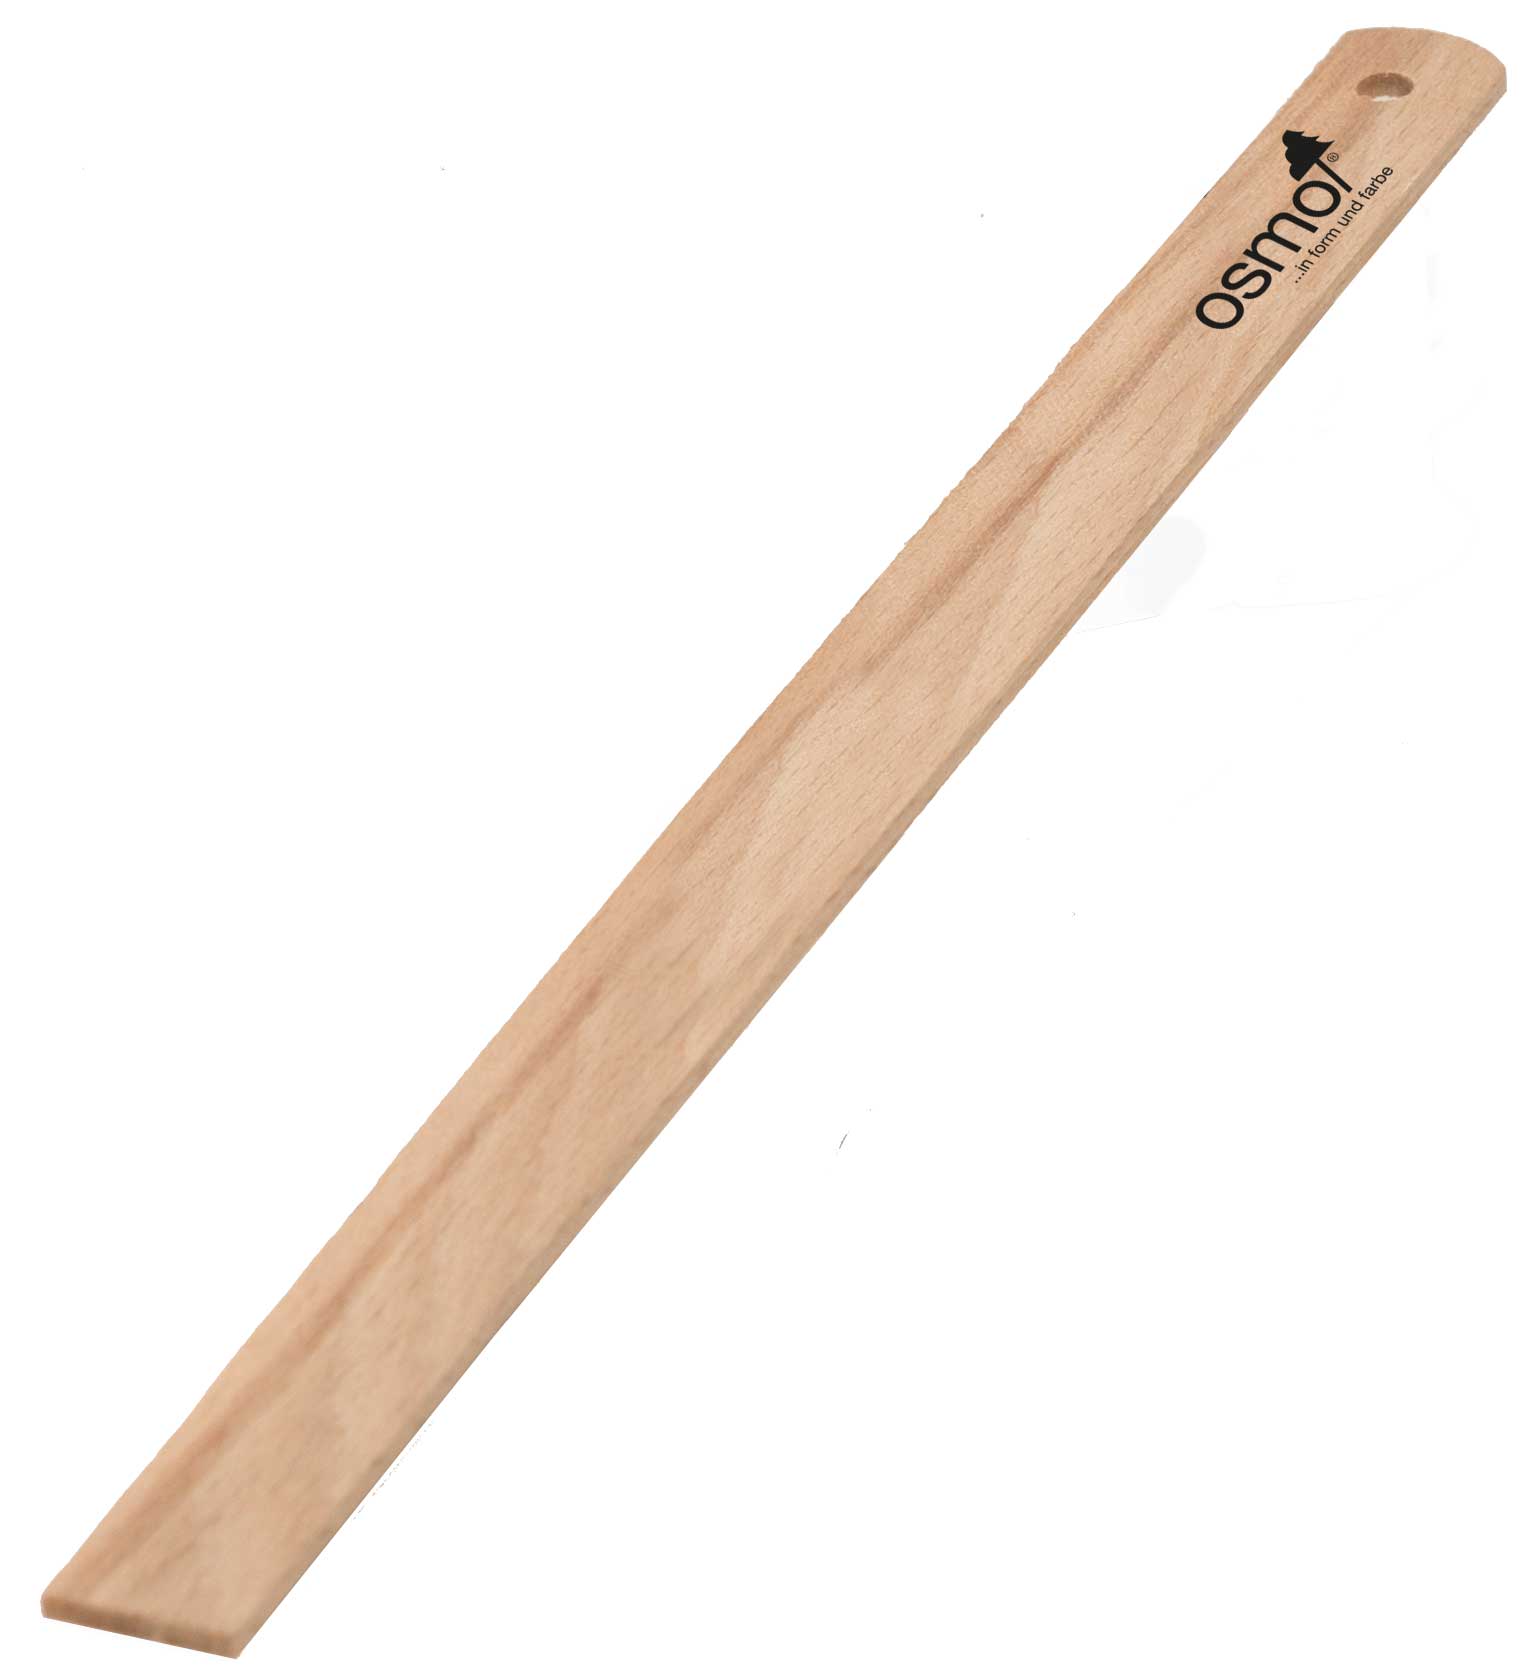 A wooden stick. Палка для размешивания Osmo. Wolf палочка для размешивания красок, 1шт910.0027. Палка деревянная. Деревянные палочки.